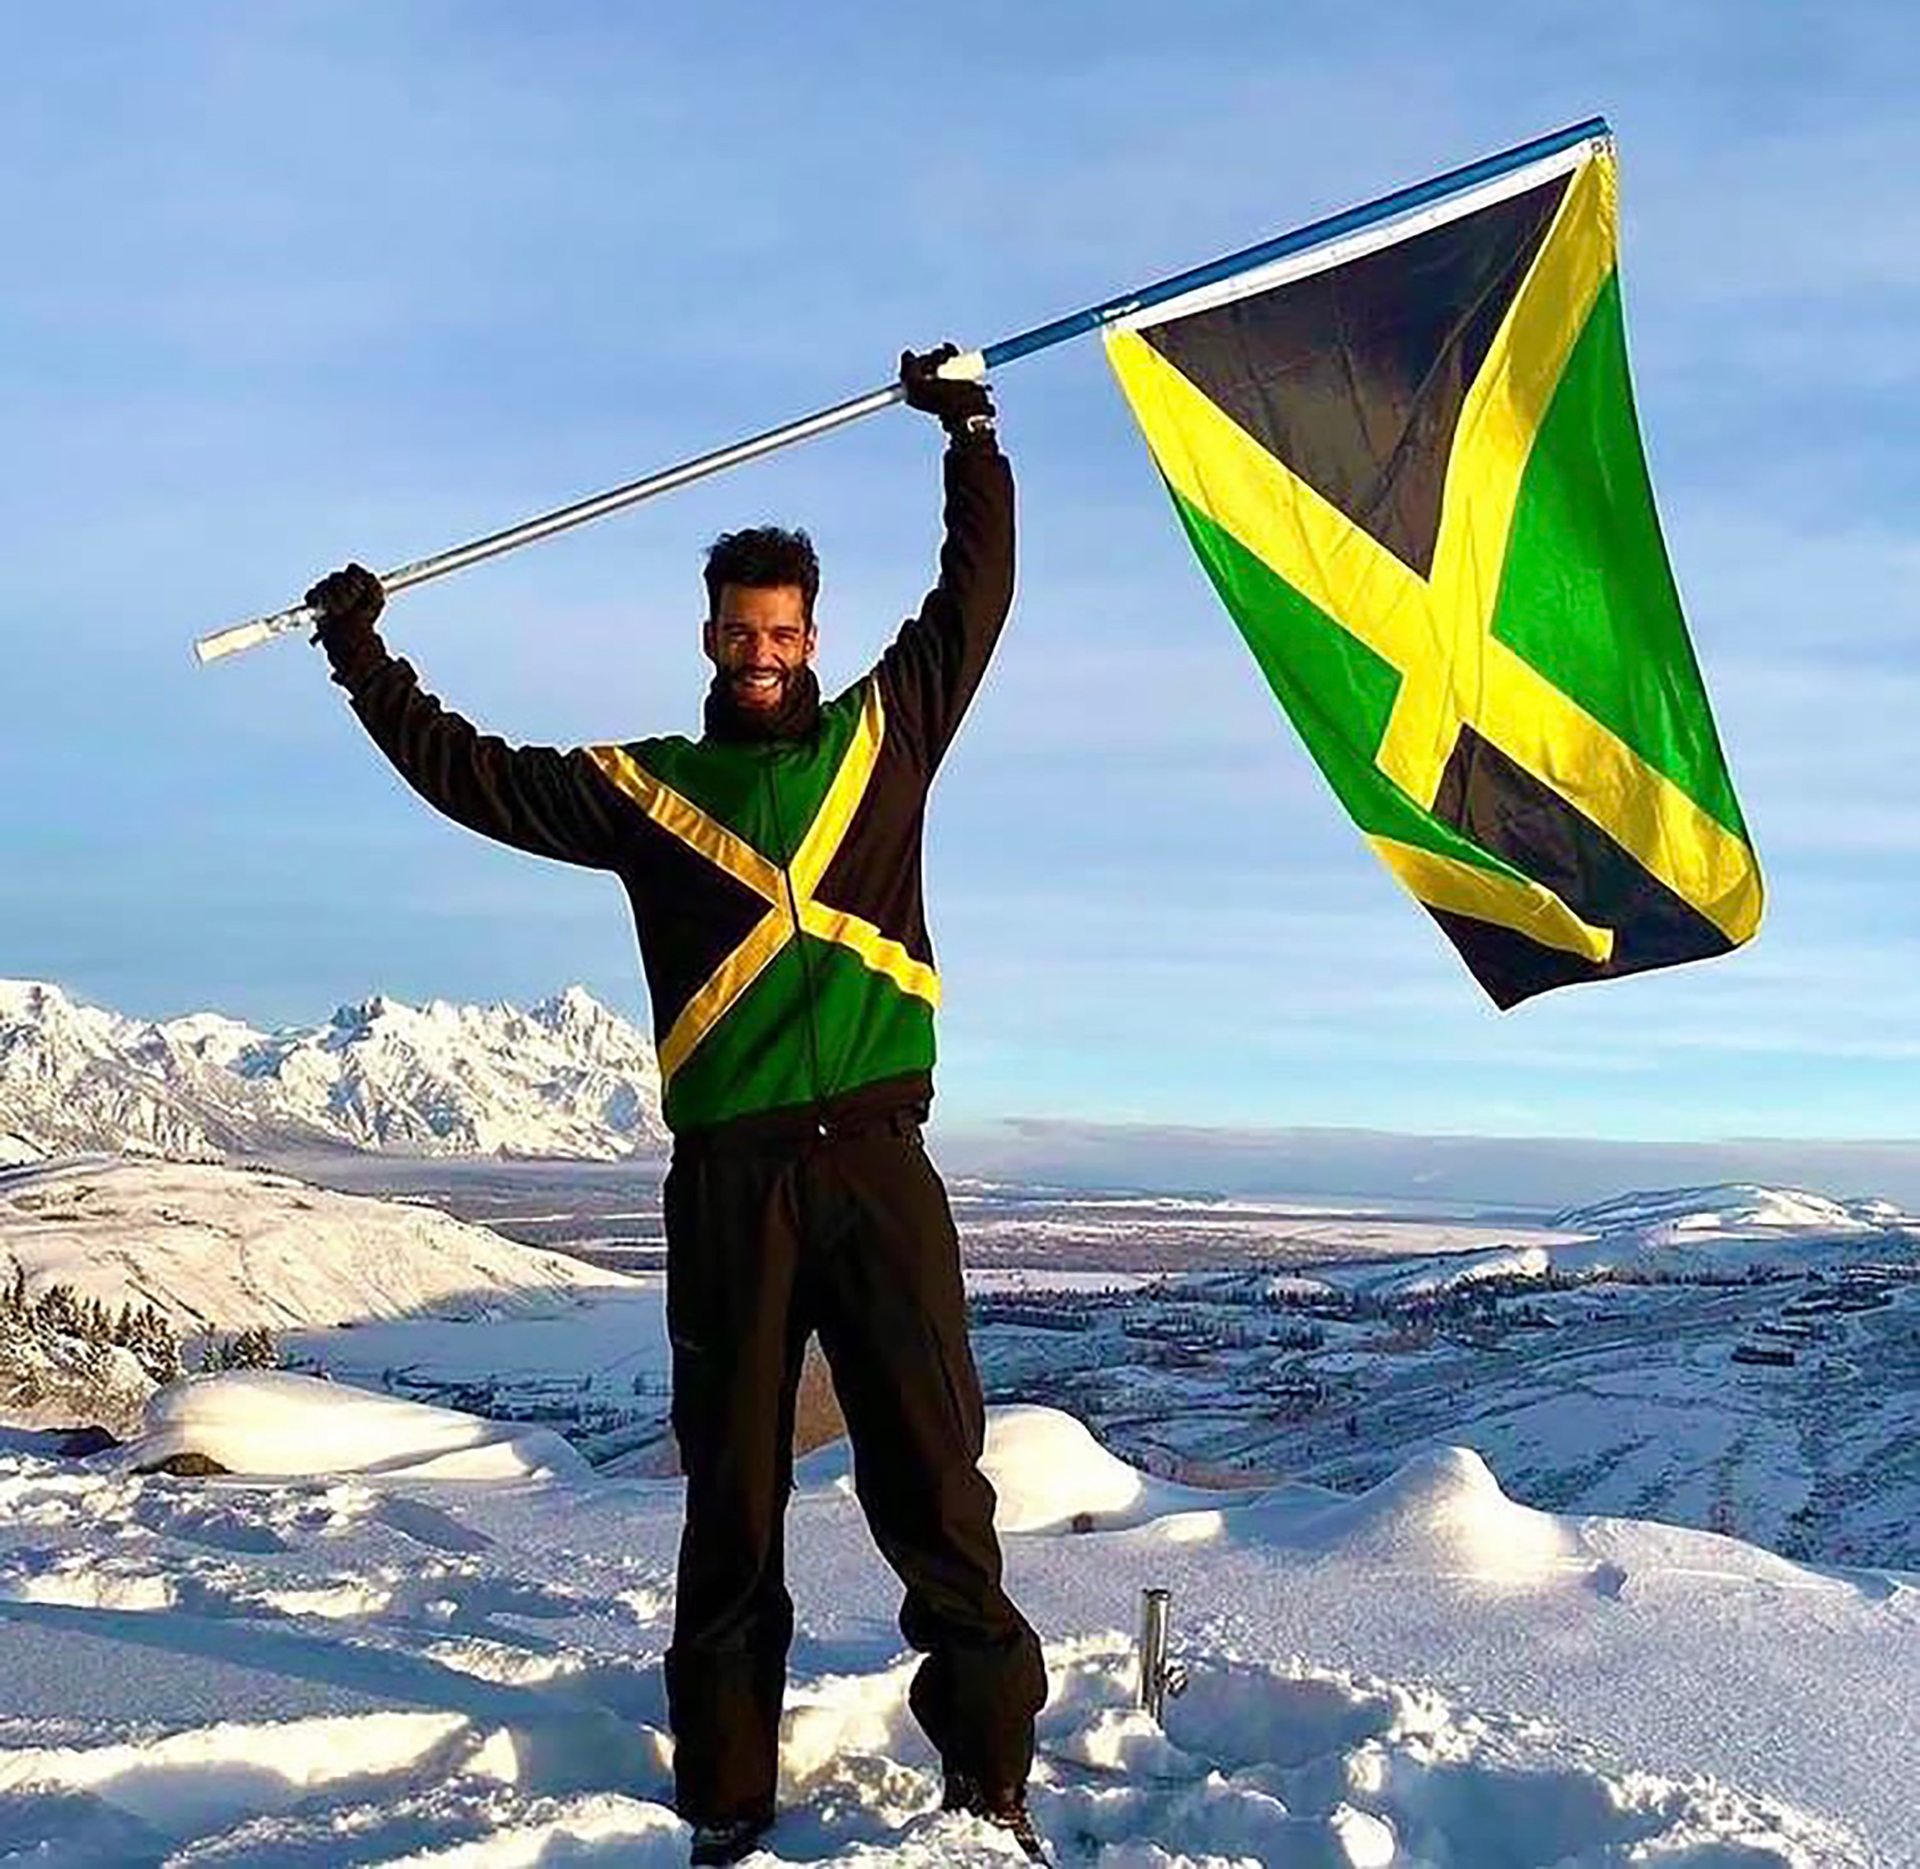 Alexander proudly raises the Jamaican flag following his accomplishment (Alexander)